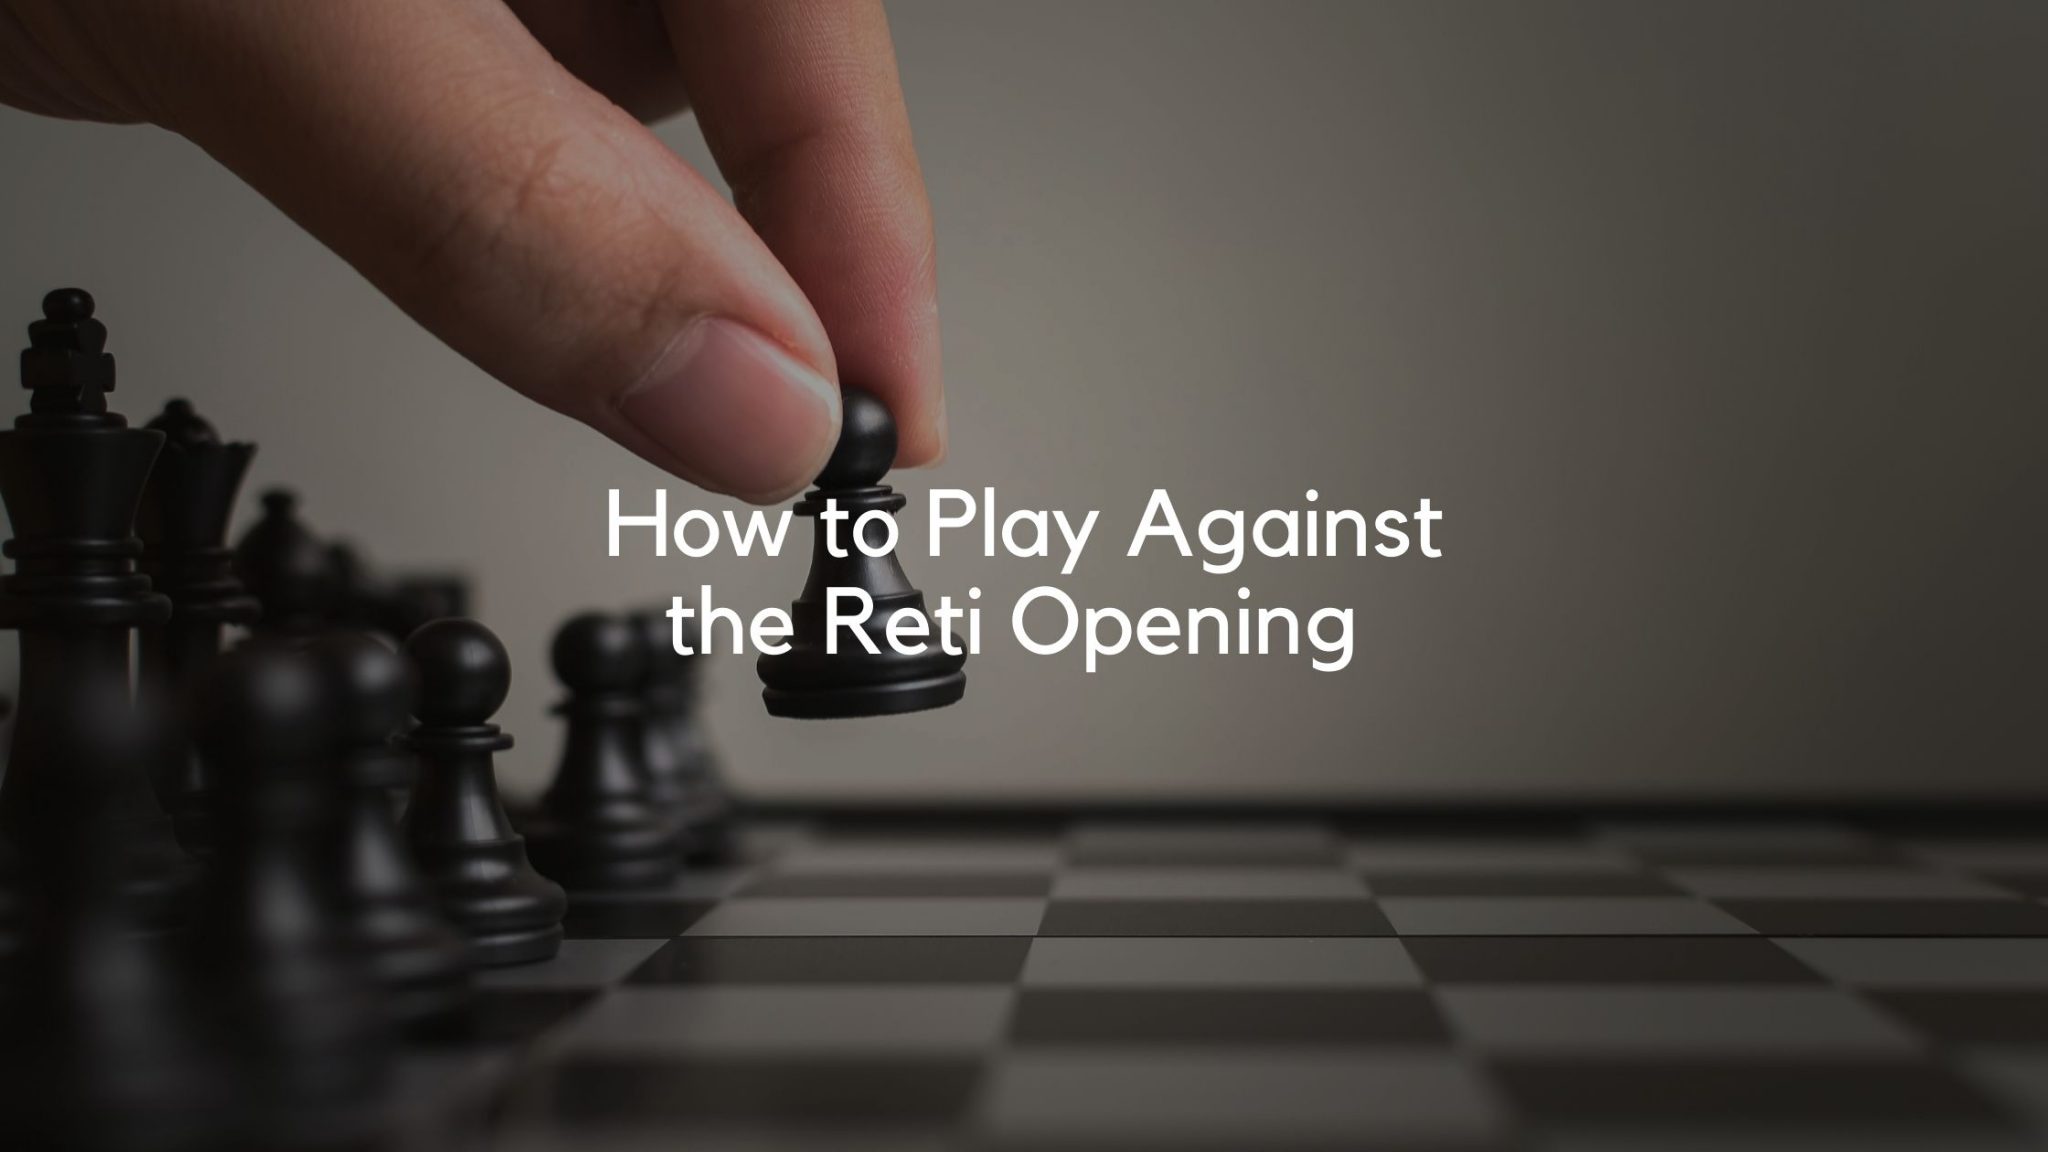 Play Against Reti Opening